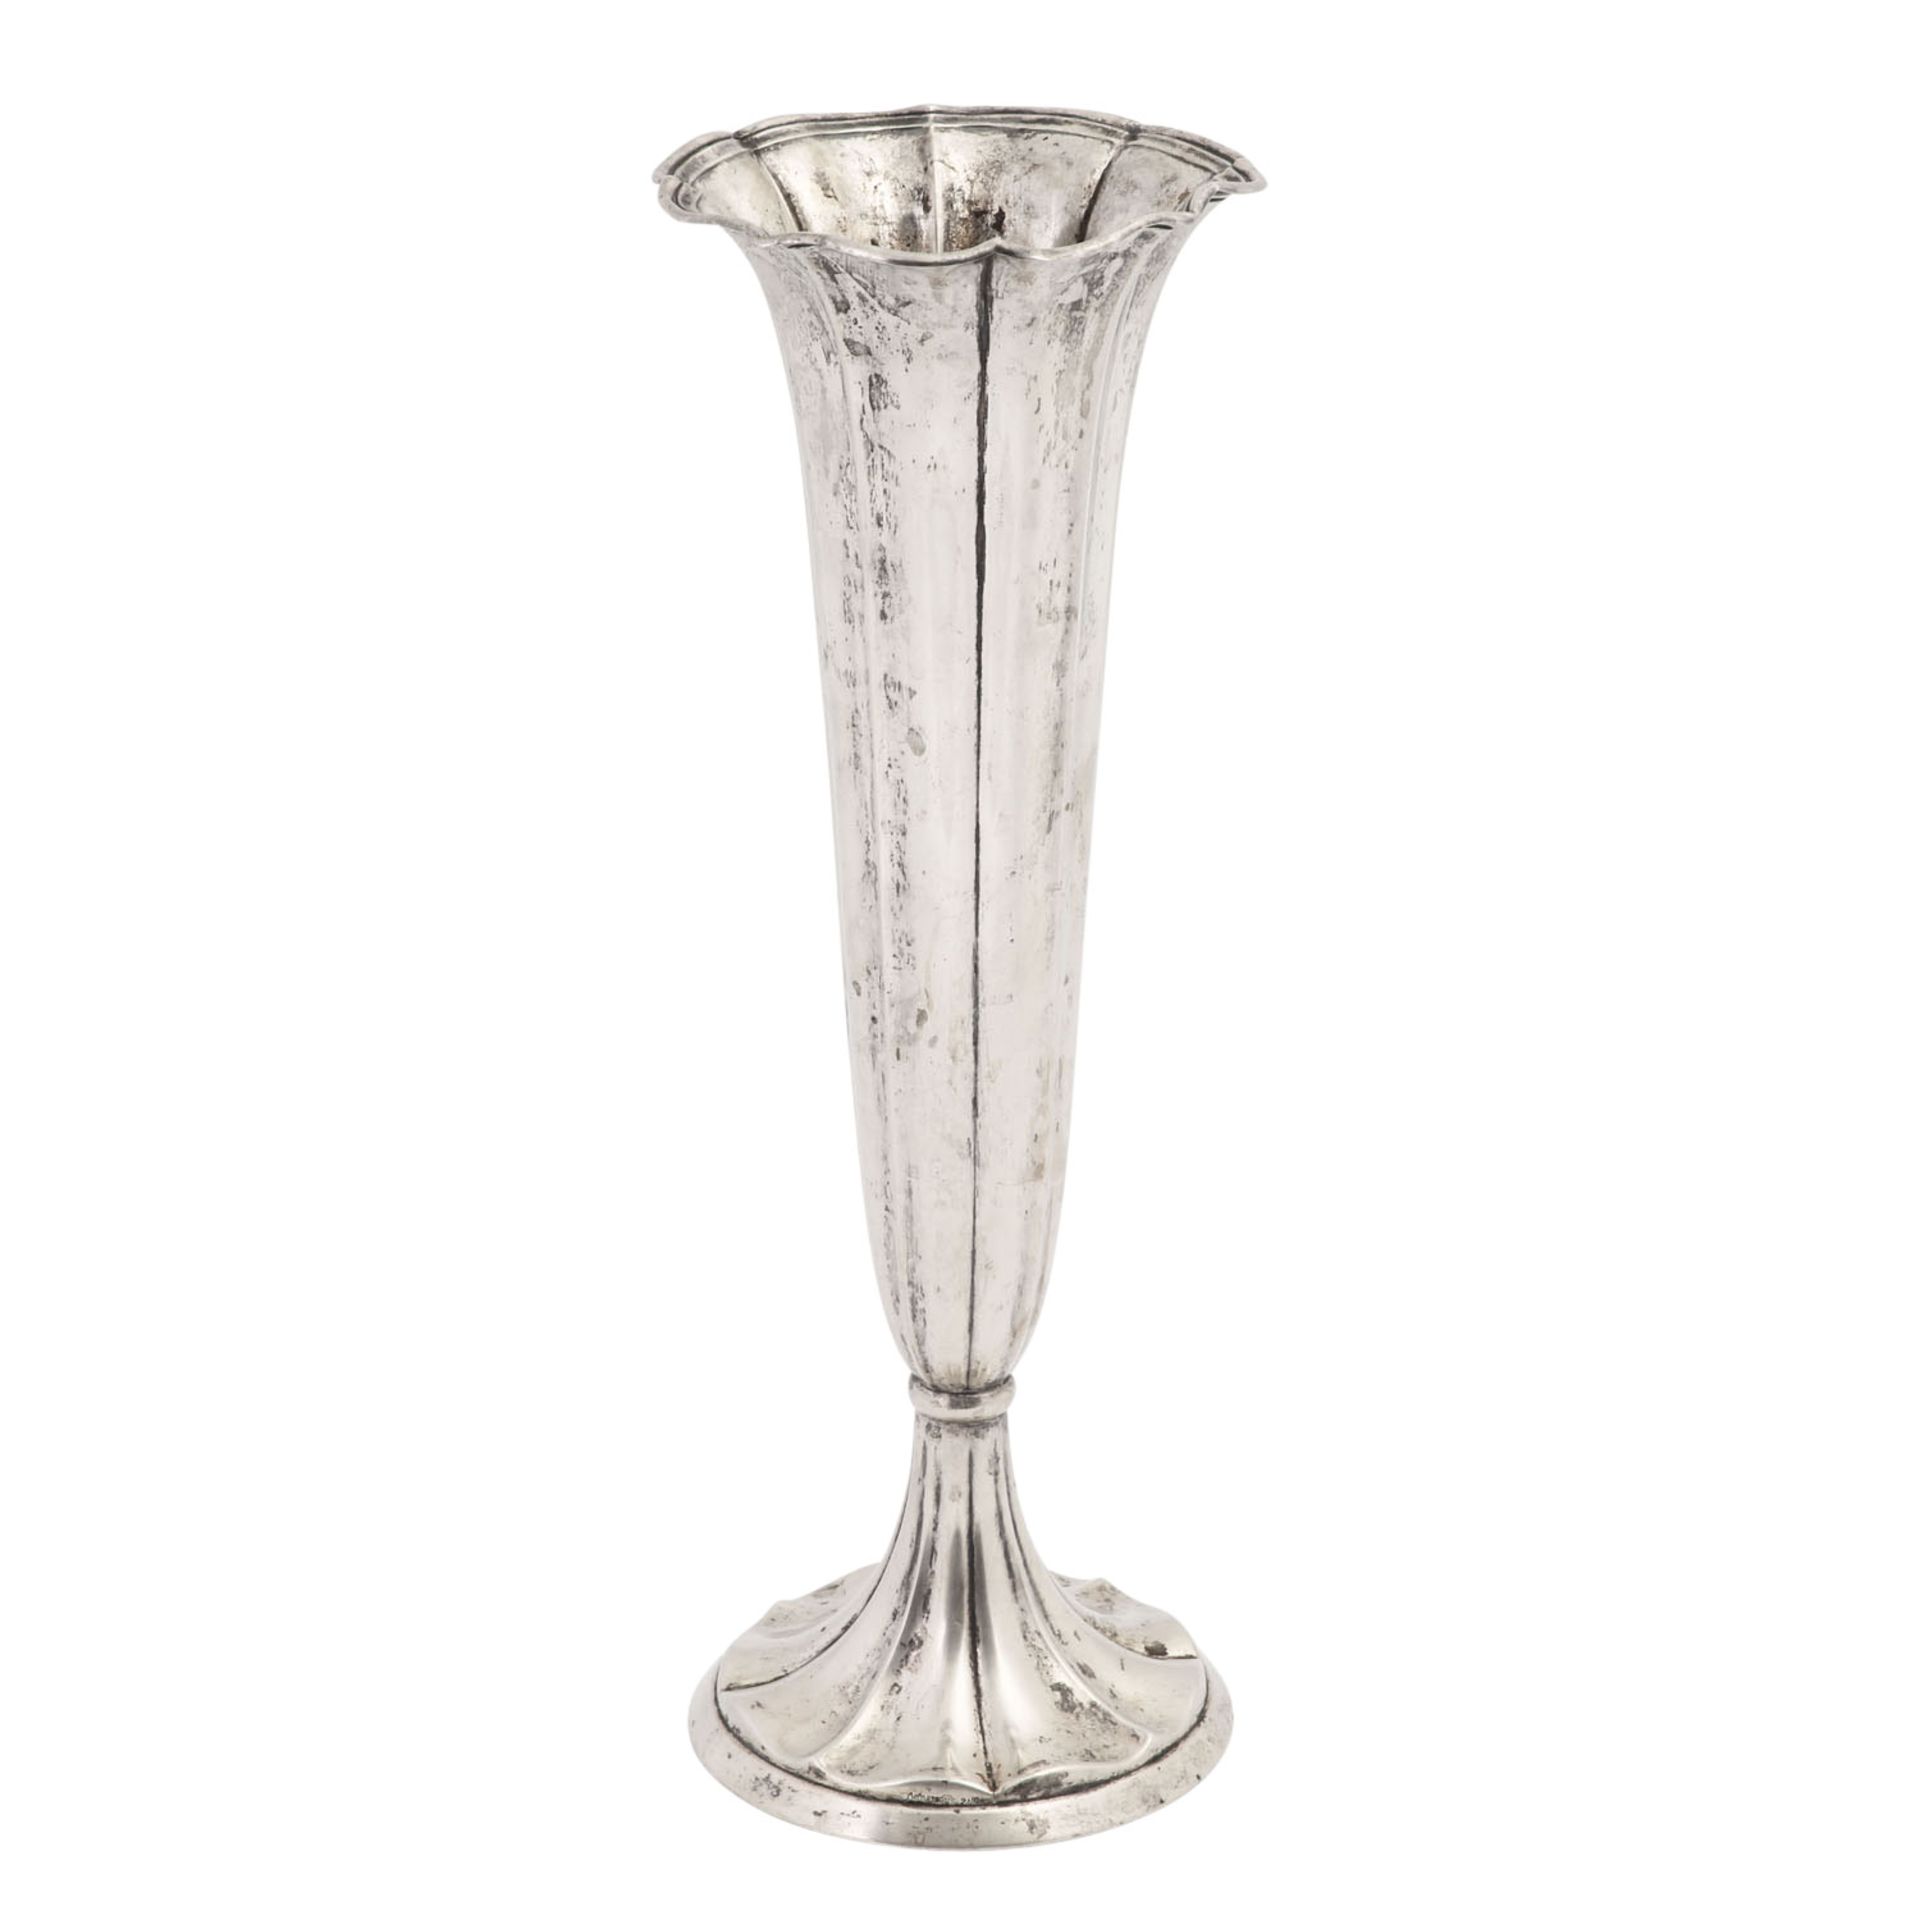 GOTTLIEB KURZ "Vase" 800er. Silber, um 1900. - Image 2 of 4